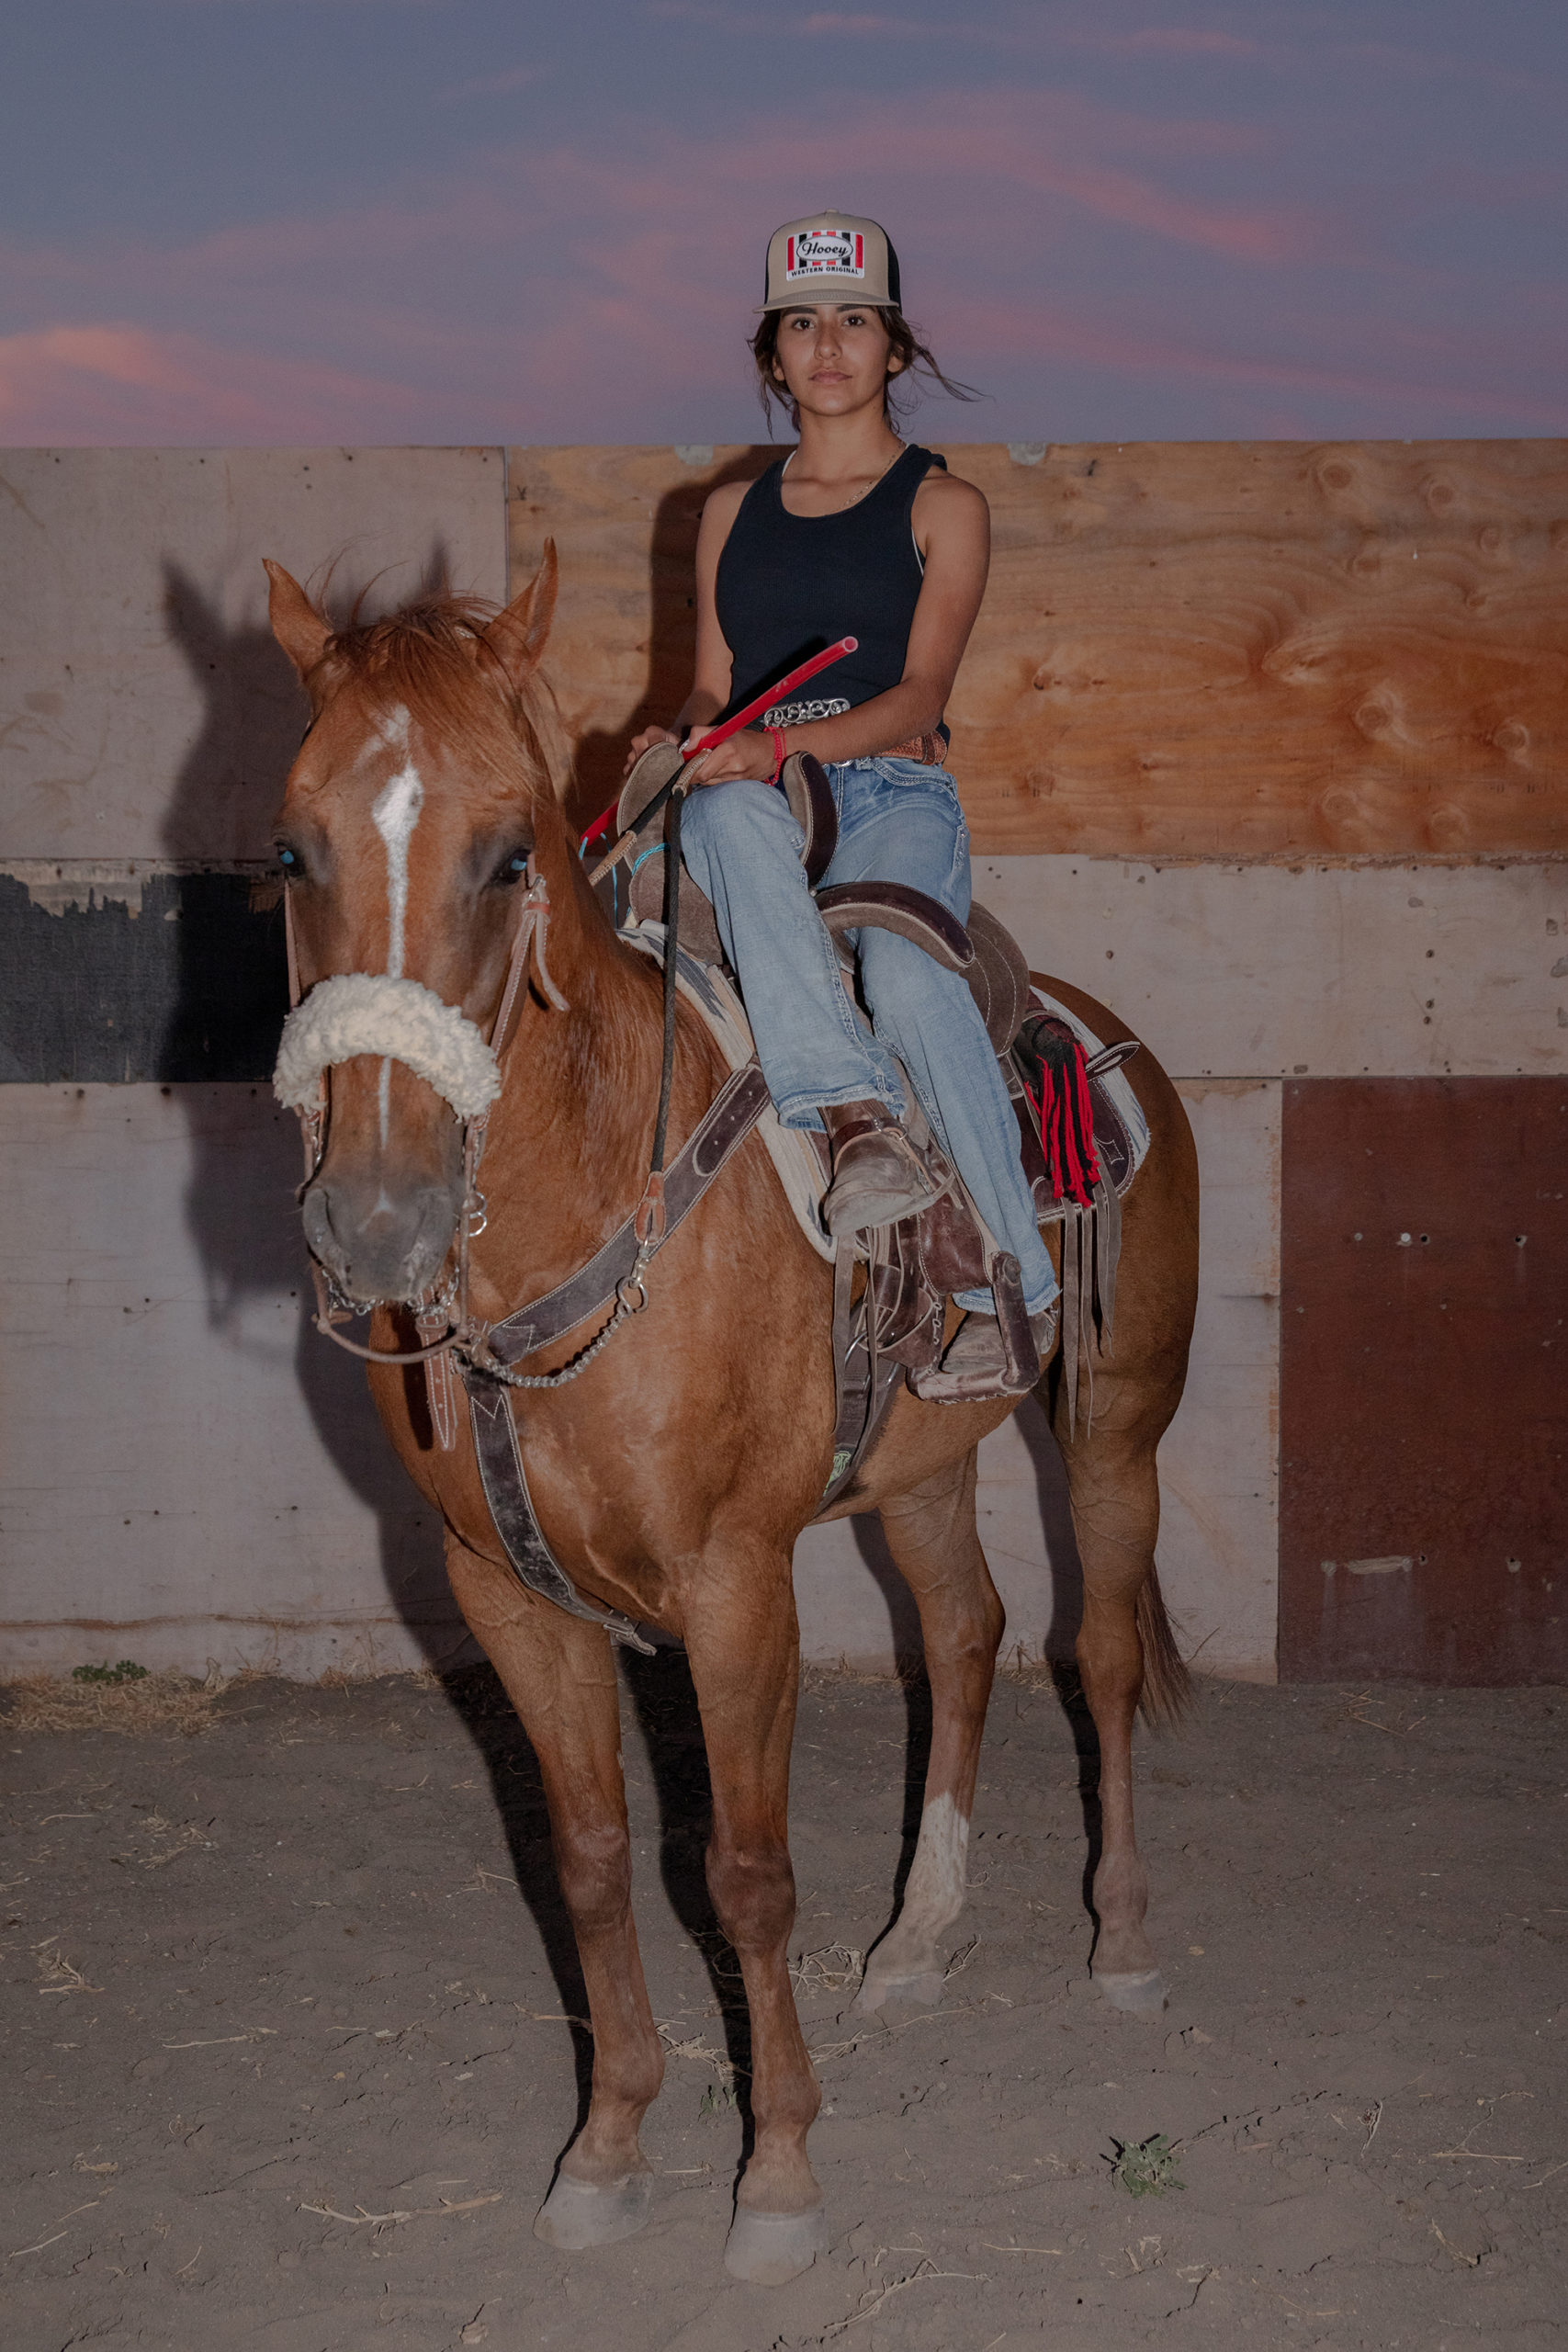 Natalie Keyssar, <em>Marissa Regla poses for a portrait on her horse after practice</em>, French Camp, California, 2021<br/>Courtesy the artist “>
		</div>
		<div class=